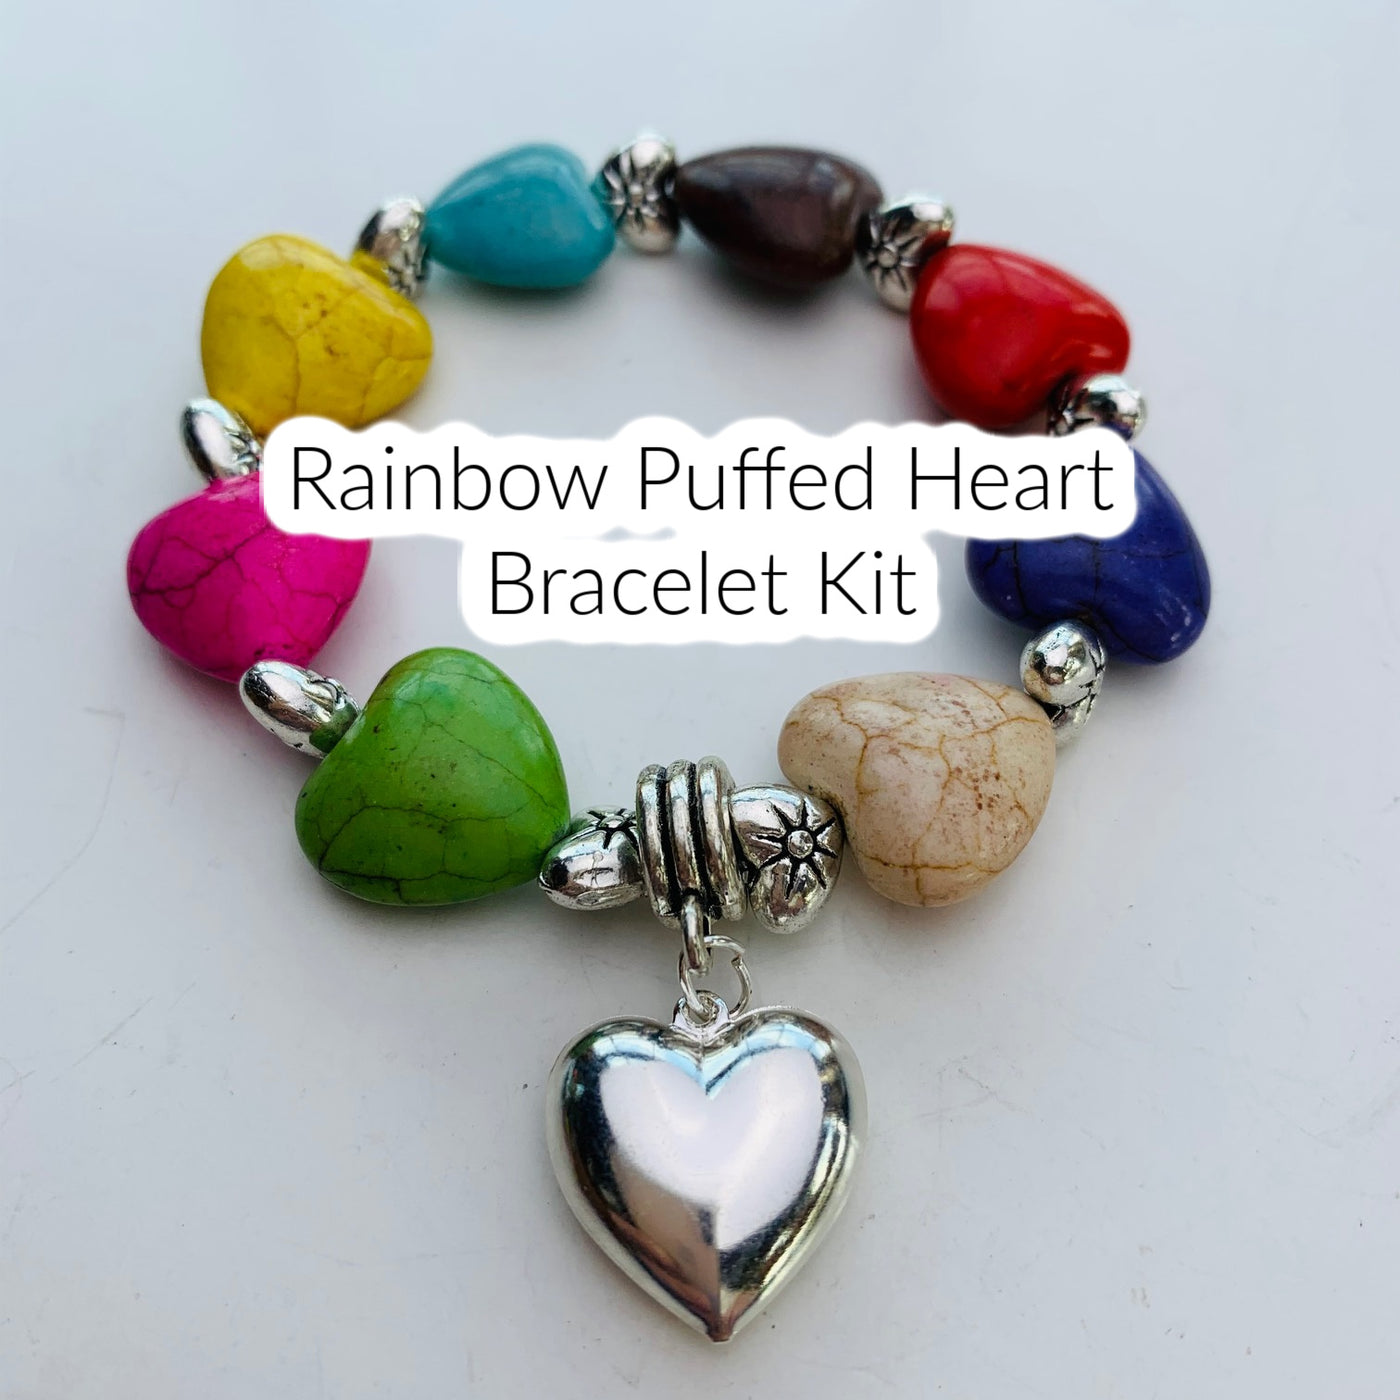 Jewelry Making Kits, Beginner Jewelry Kits for Adults - Bracelet